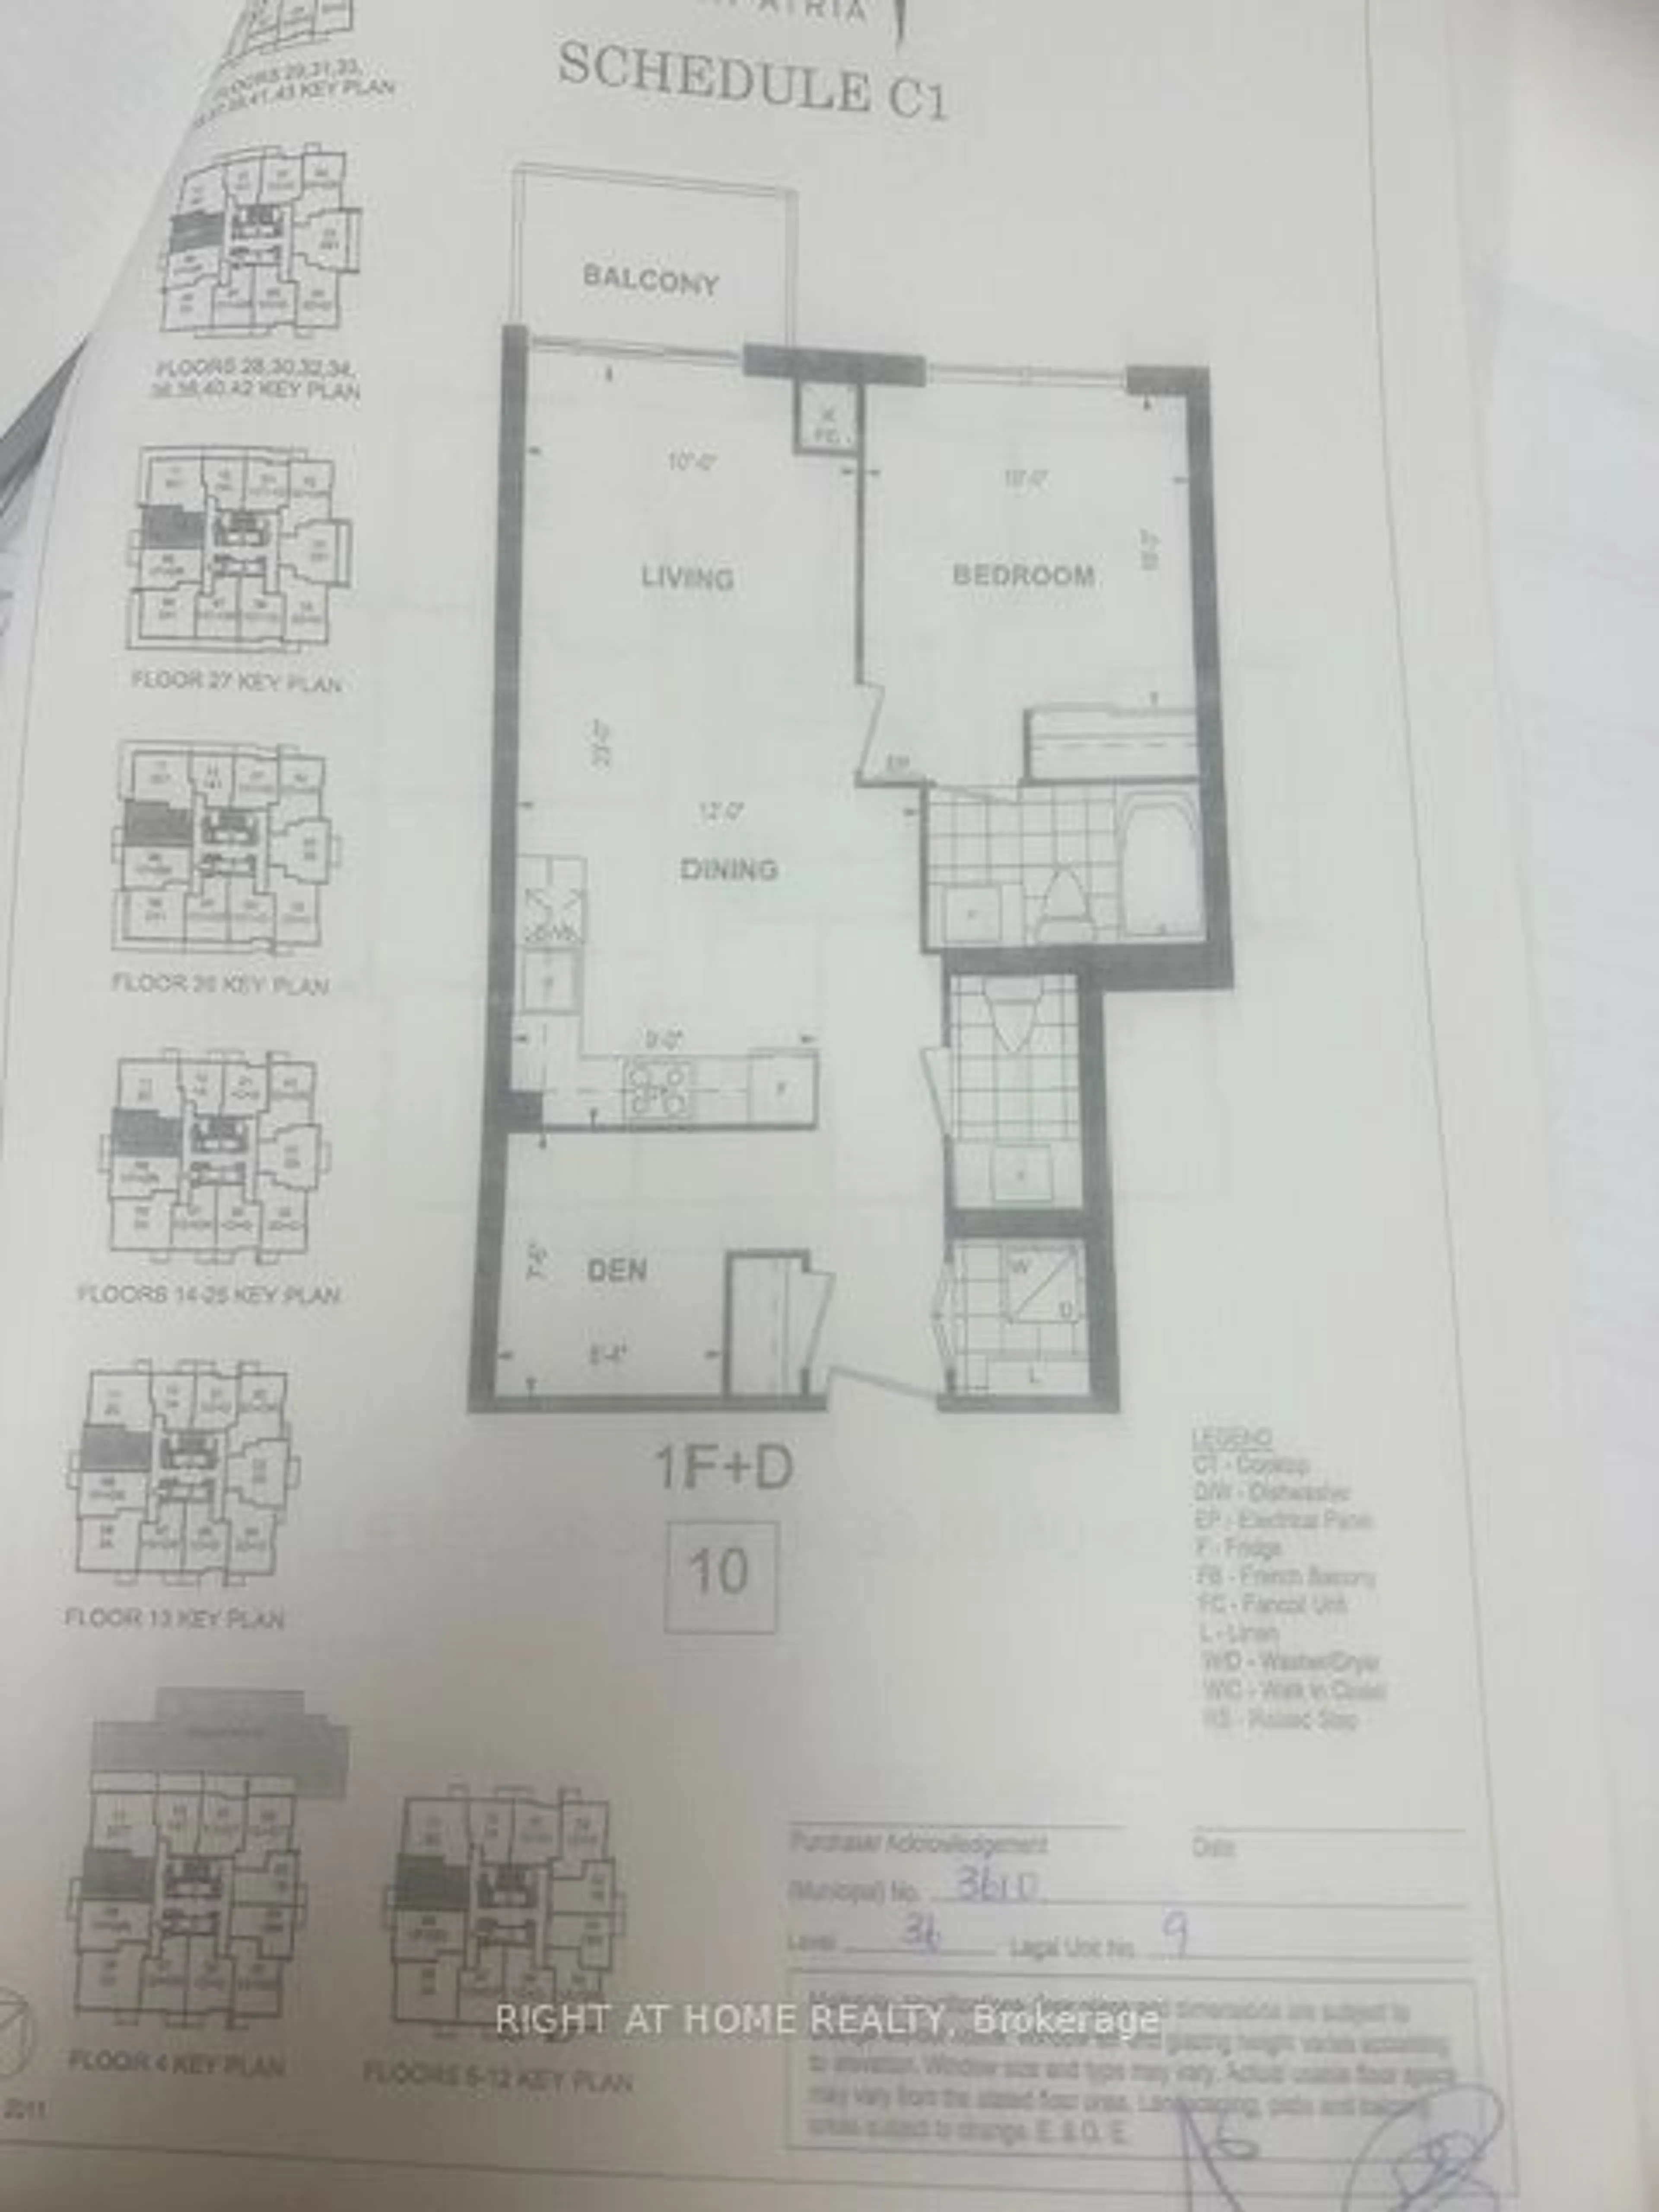 Floor plan for 55 Ann O'reilly Rd #3610, Toronto Ontario M2J 0E1